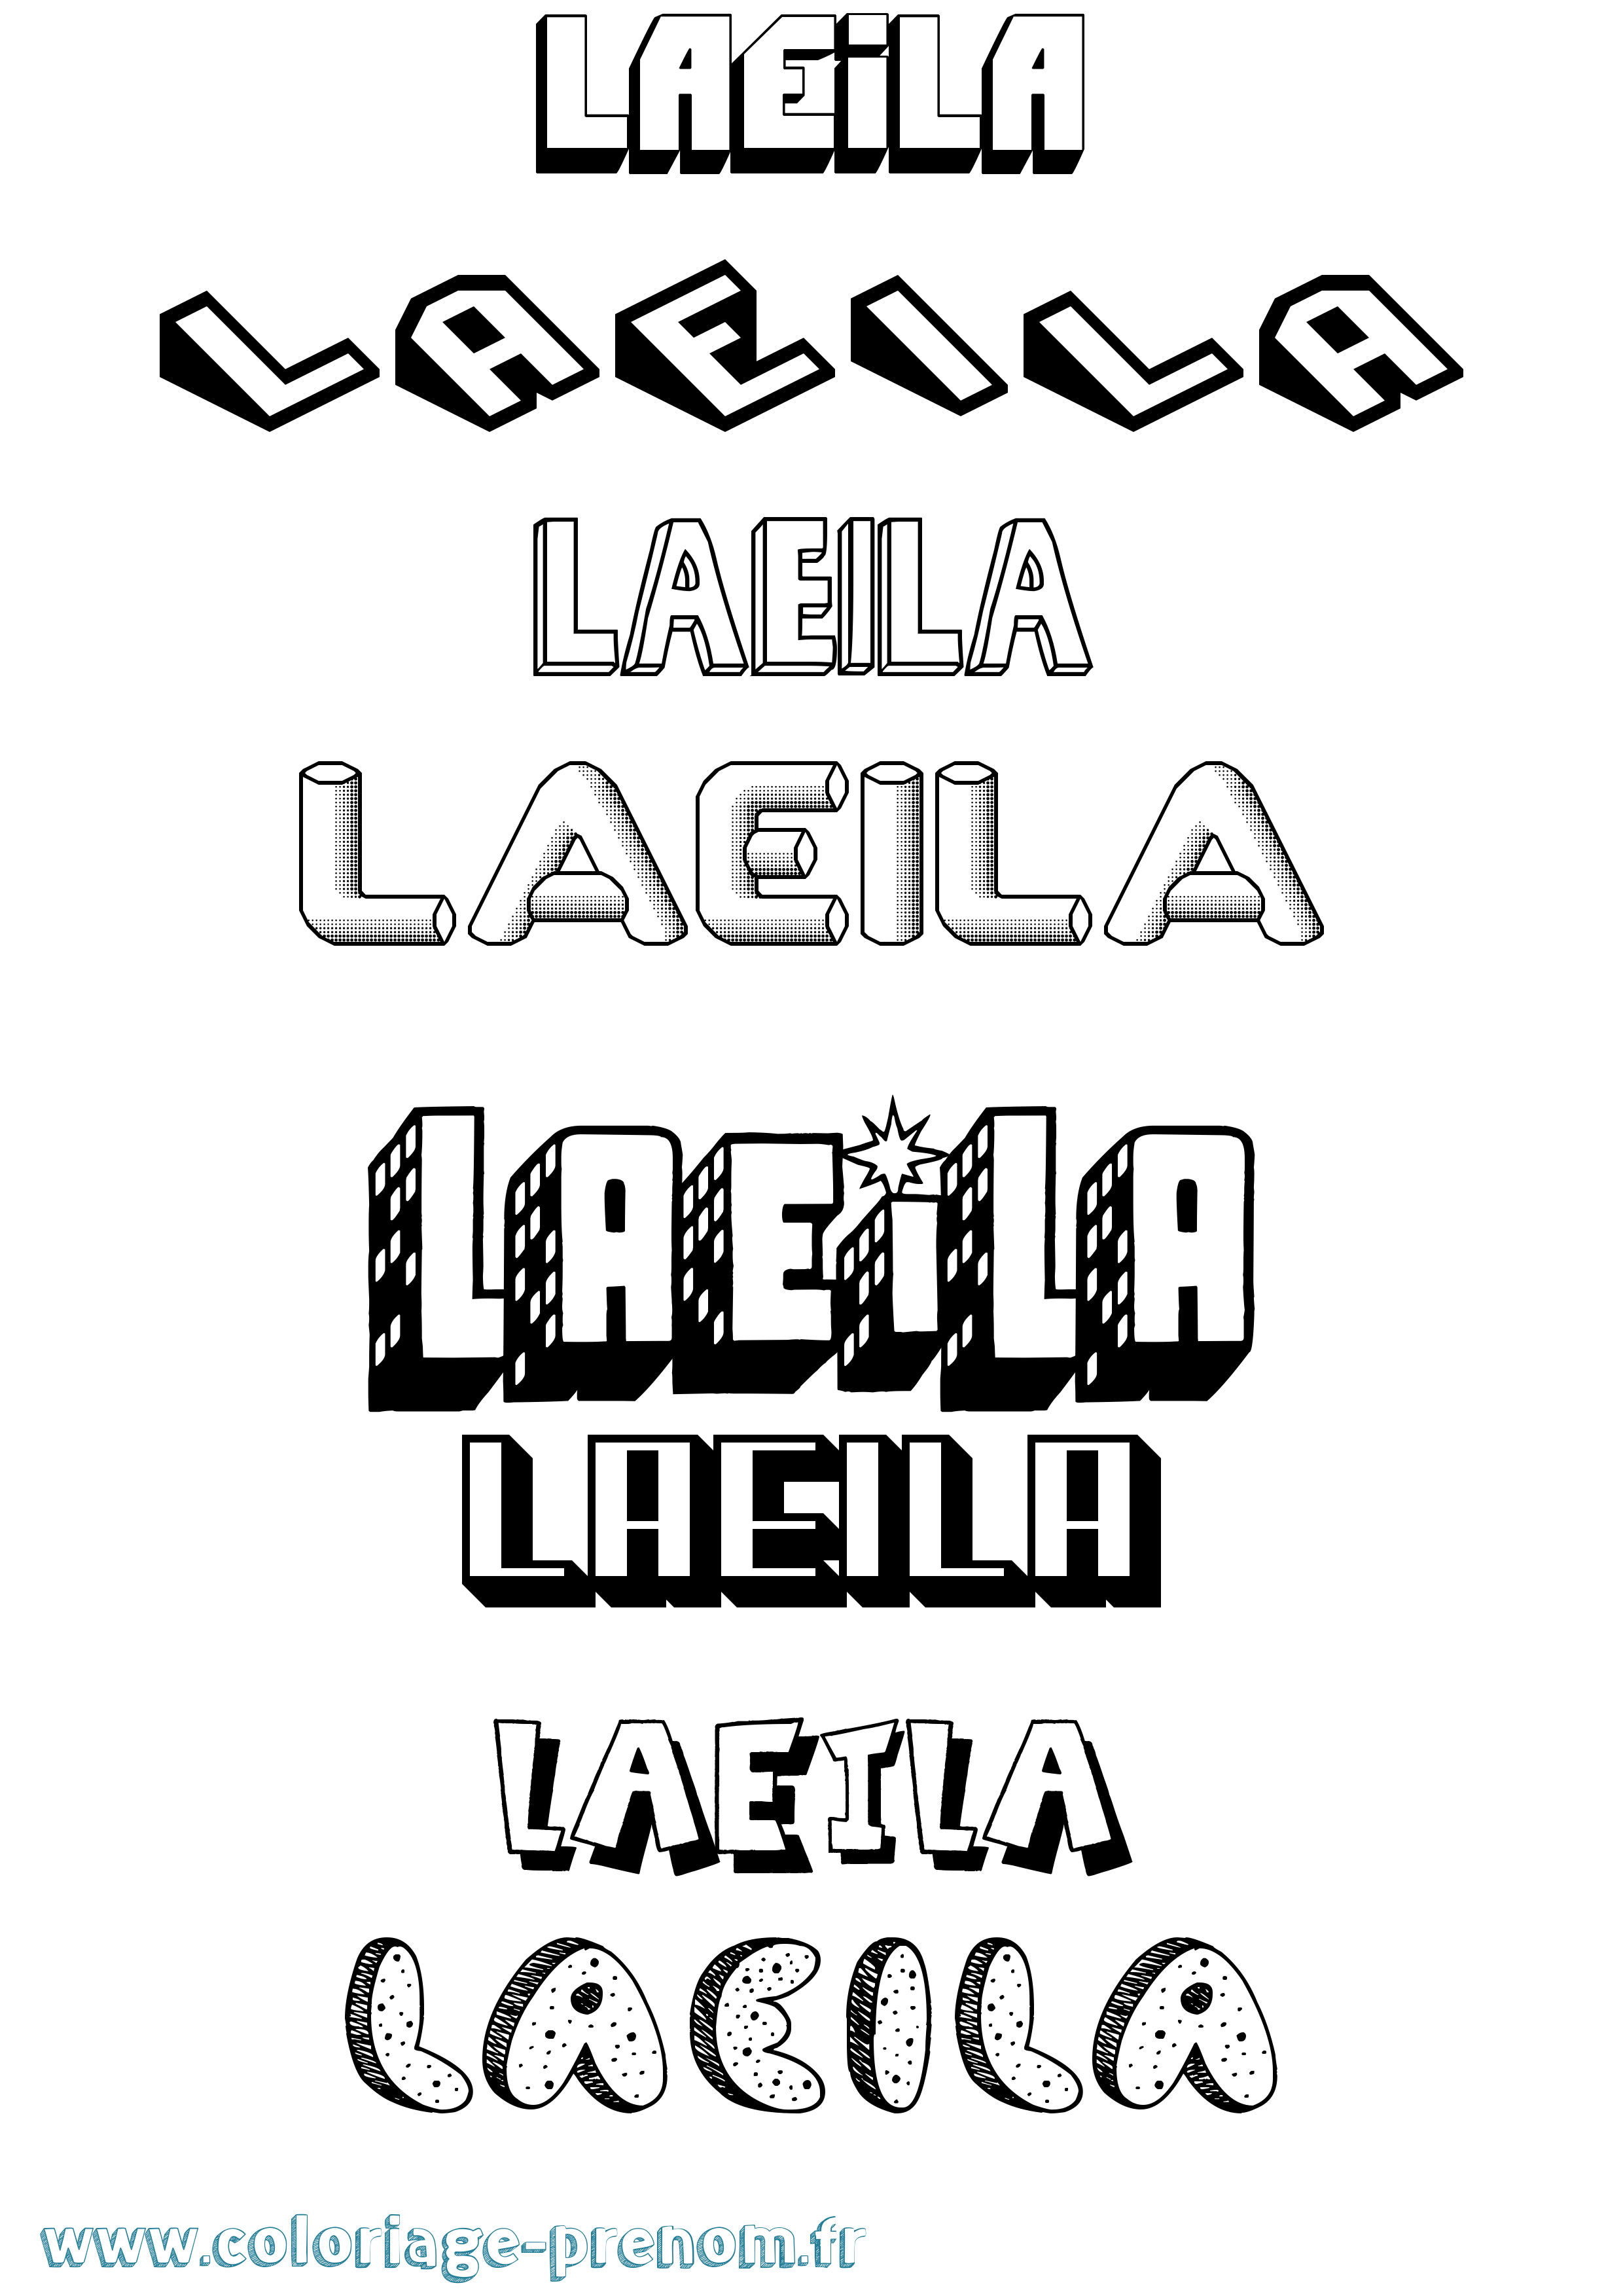 Coloriage prénom Laeila Effet 3D